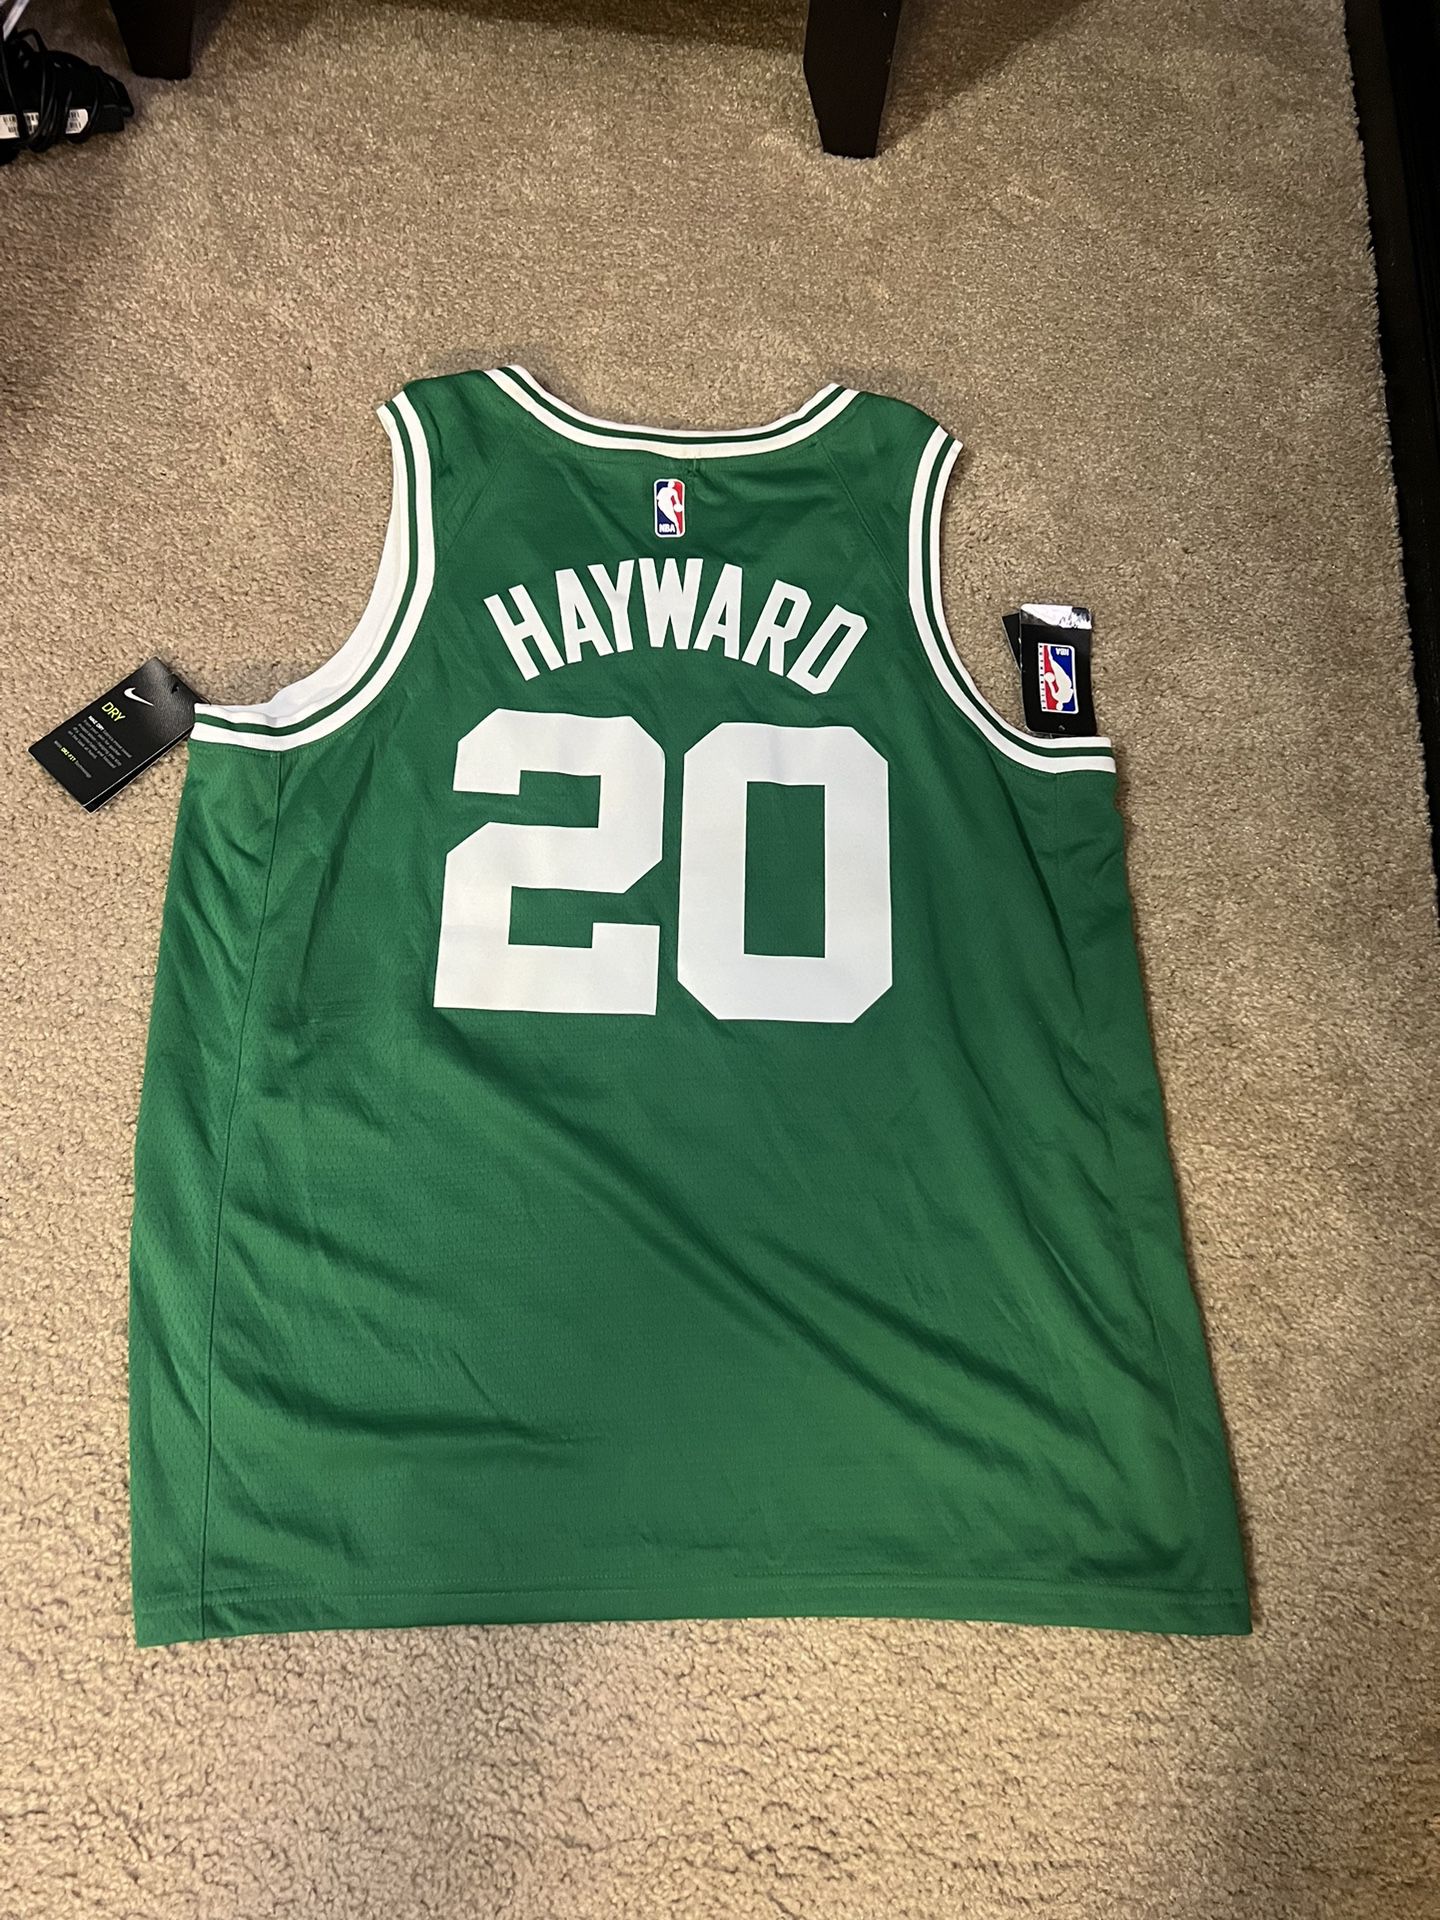 Gordon Hayward Celtics Association Edition Nike NBA Swingman Jersey